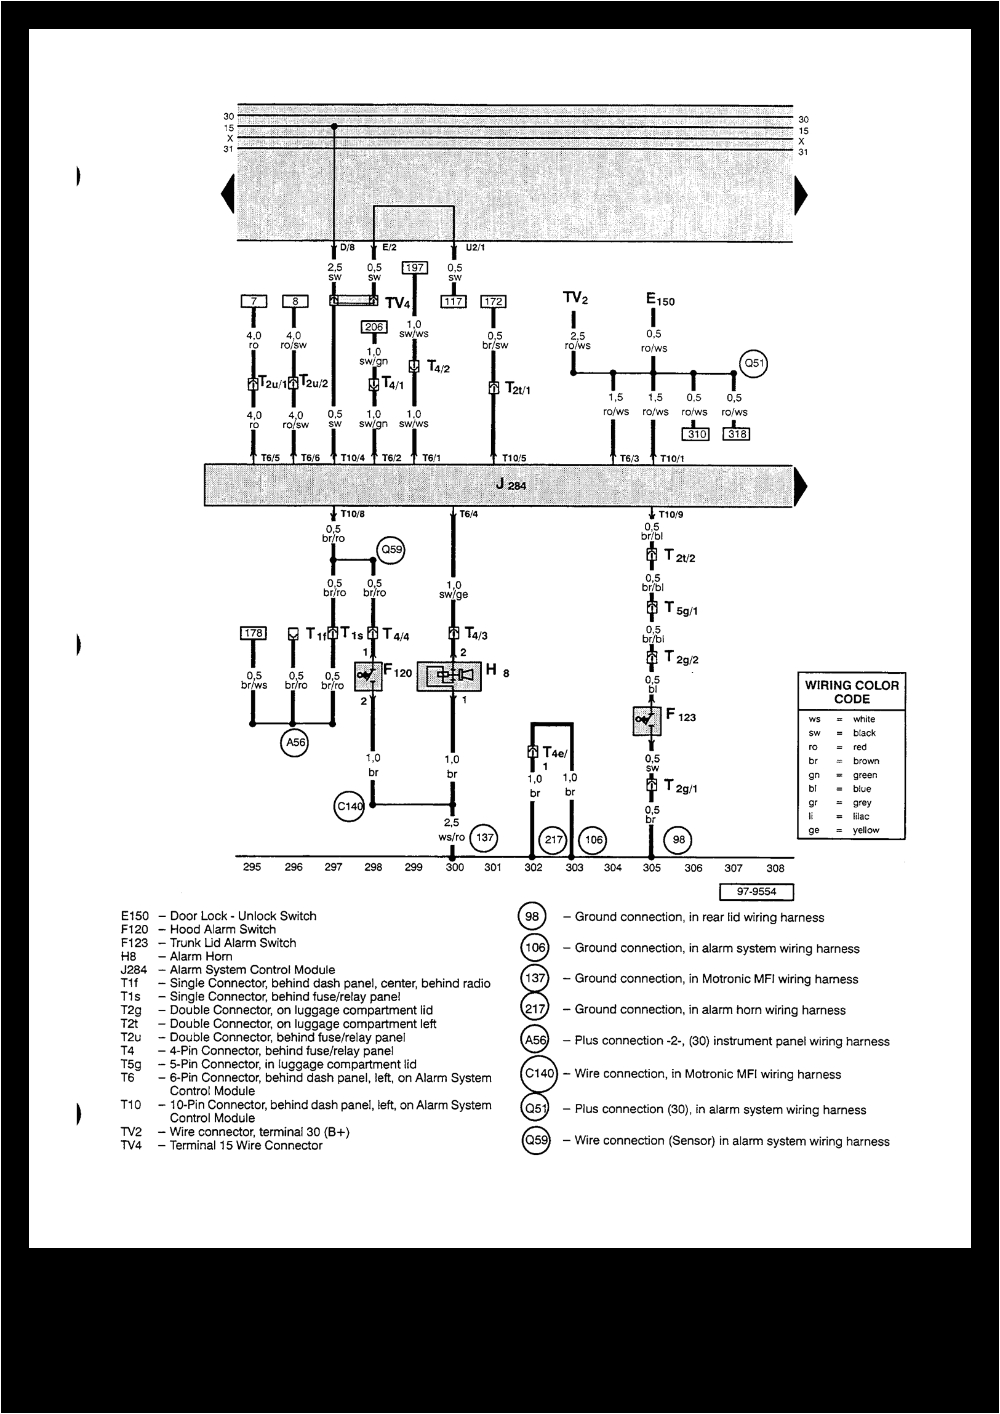 wiring diagram for 97 cabrio basic electronics wiring diagram gif